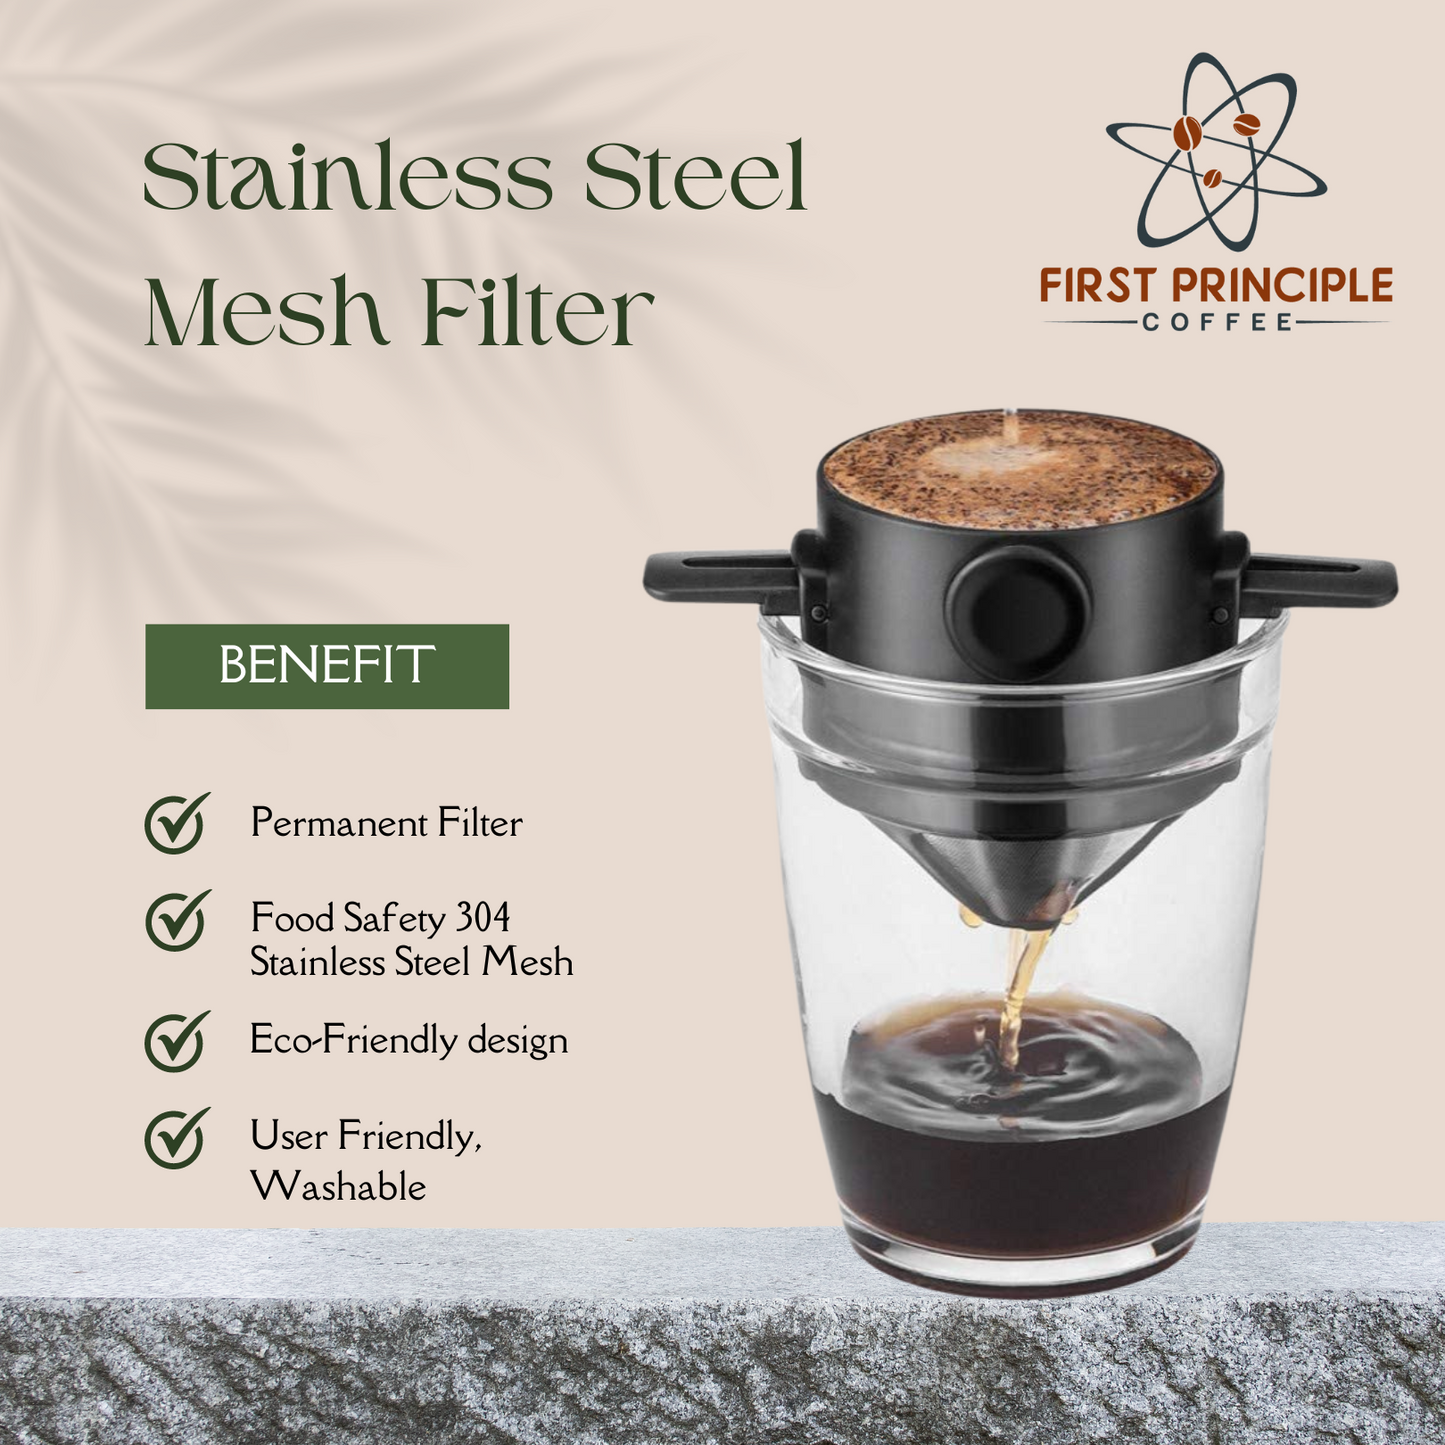 First Principle Coffee Mesh Filter